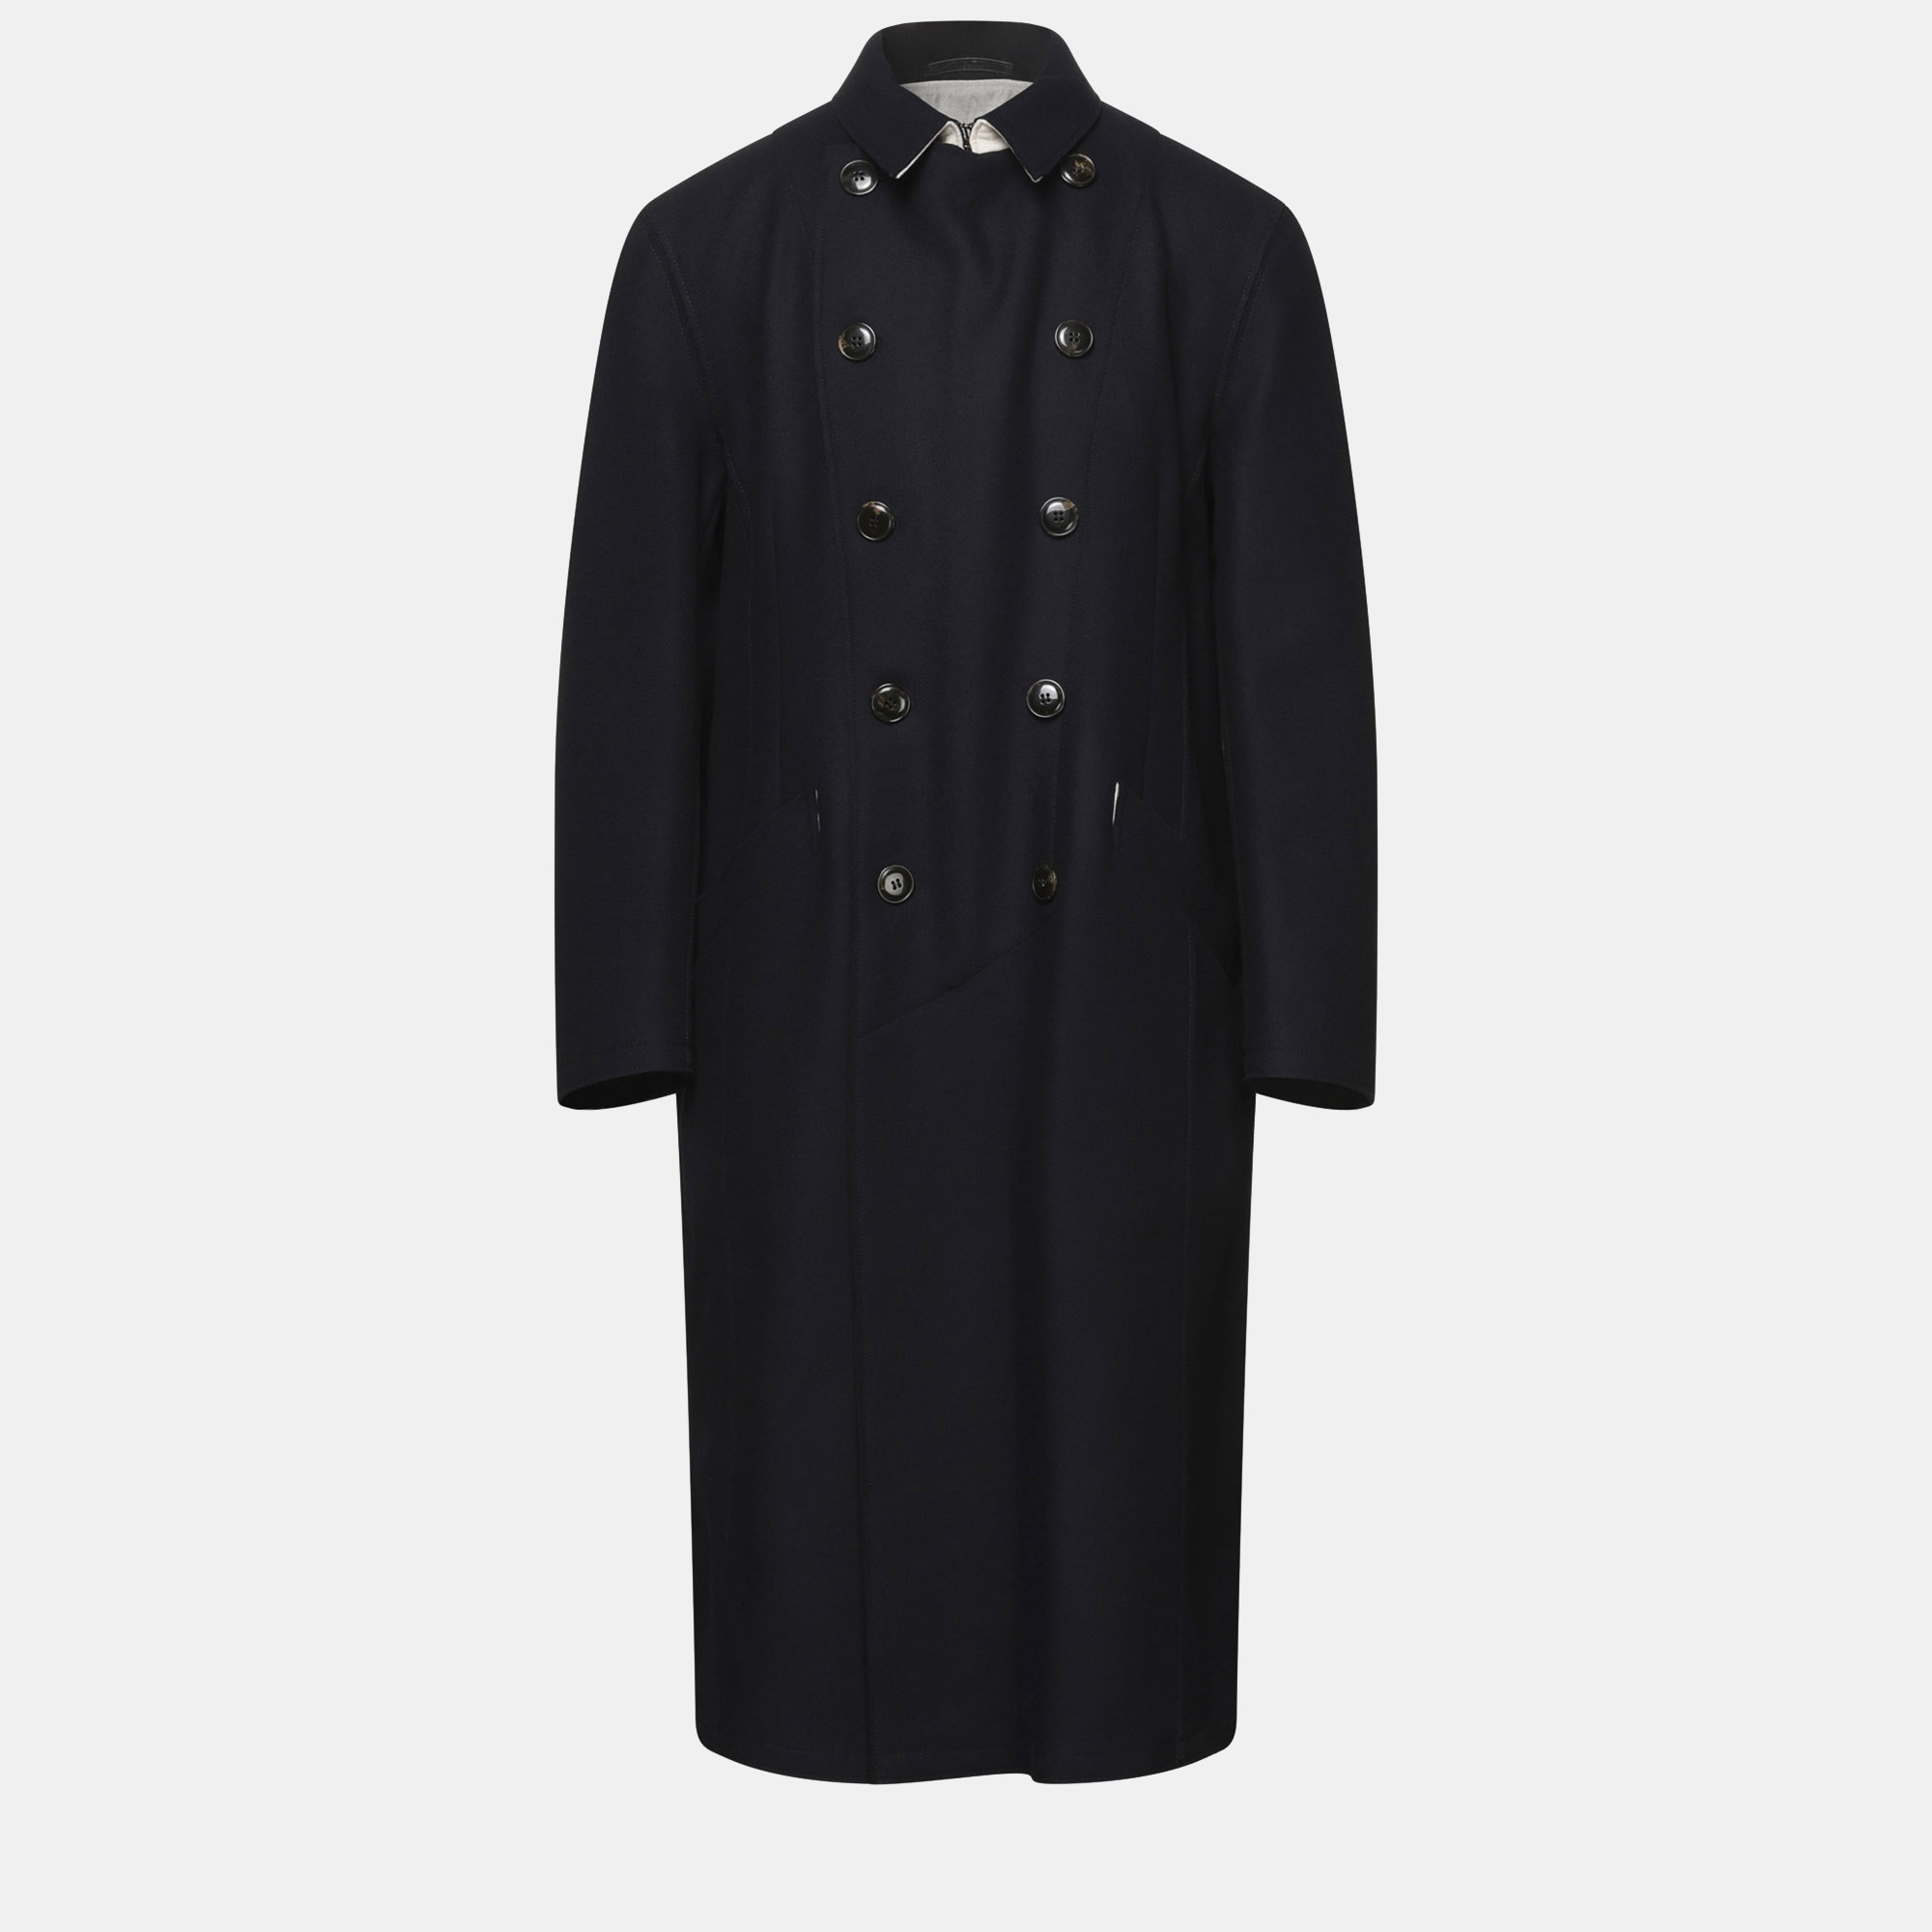 Giorgio armani navy blue virgin wool coat 48